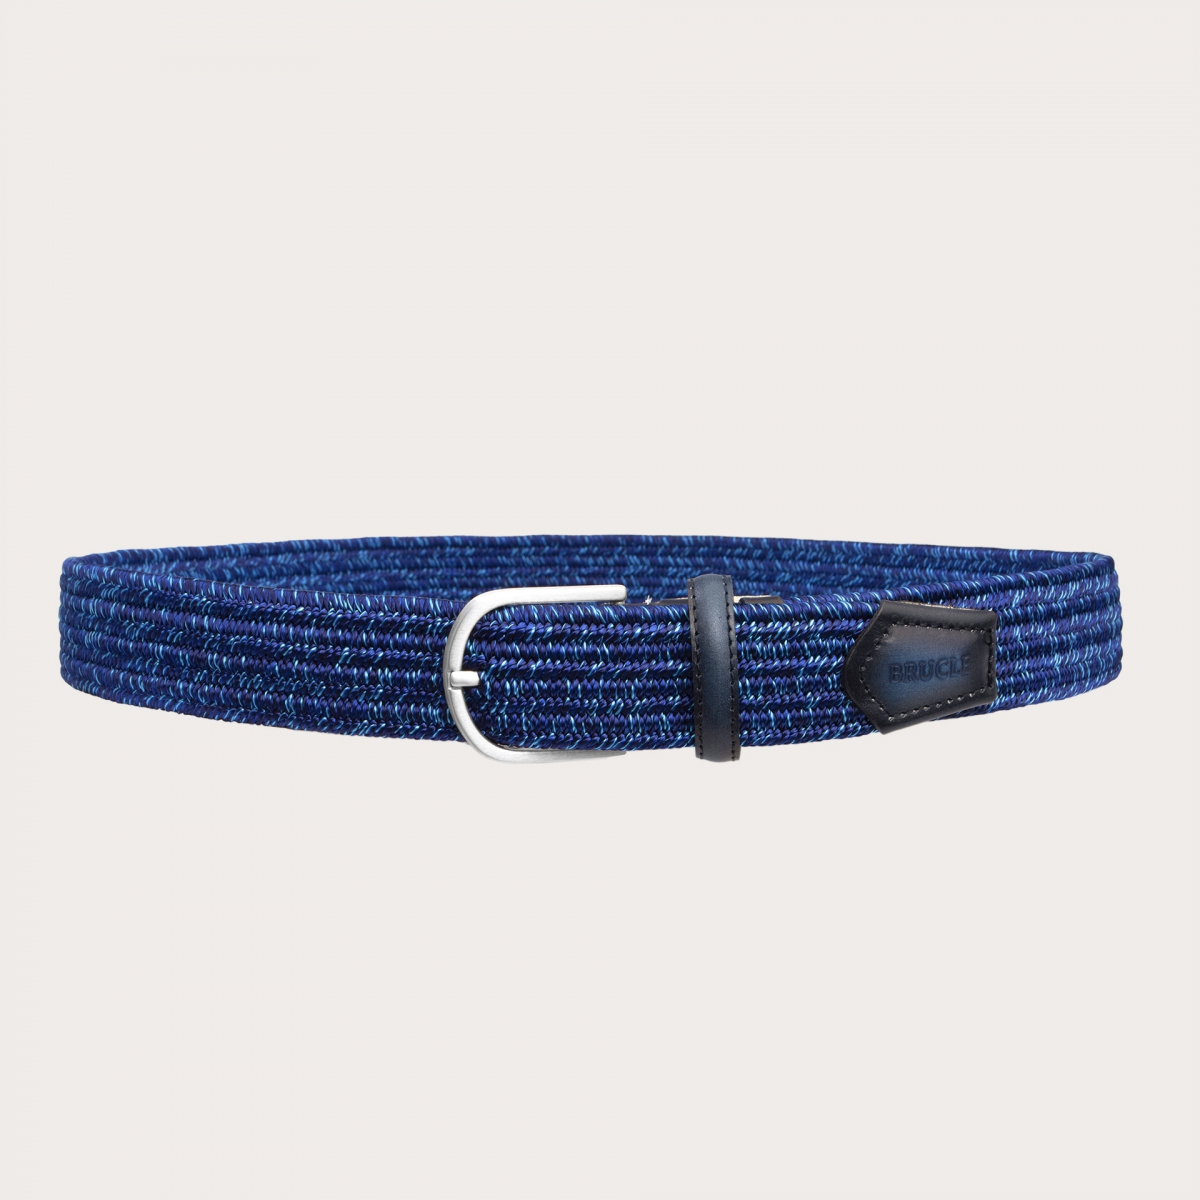 BRUCLE Braided elastic blue melange belt